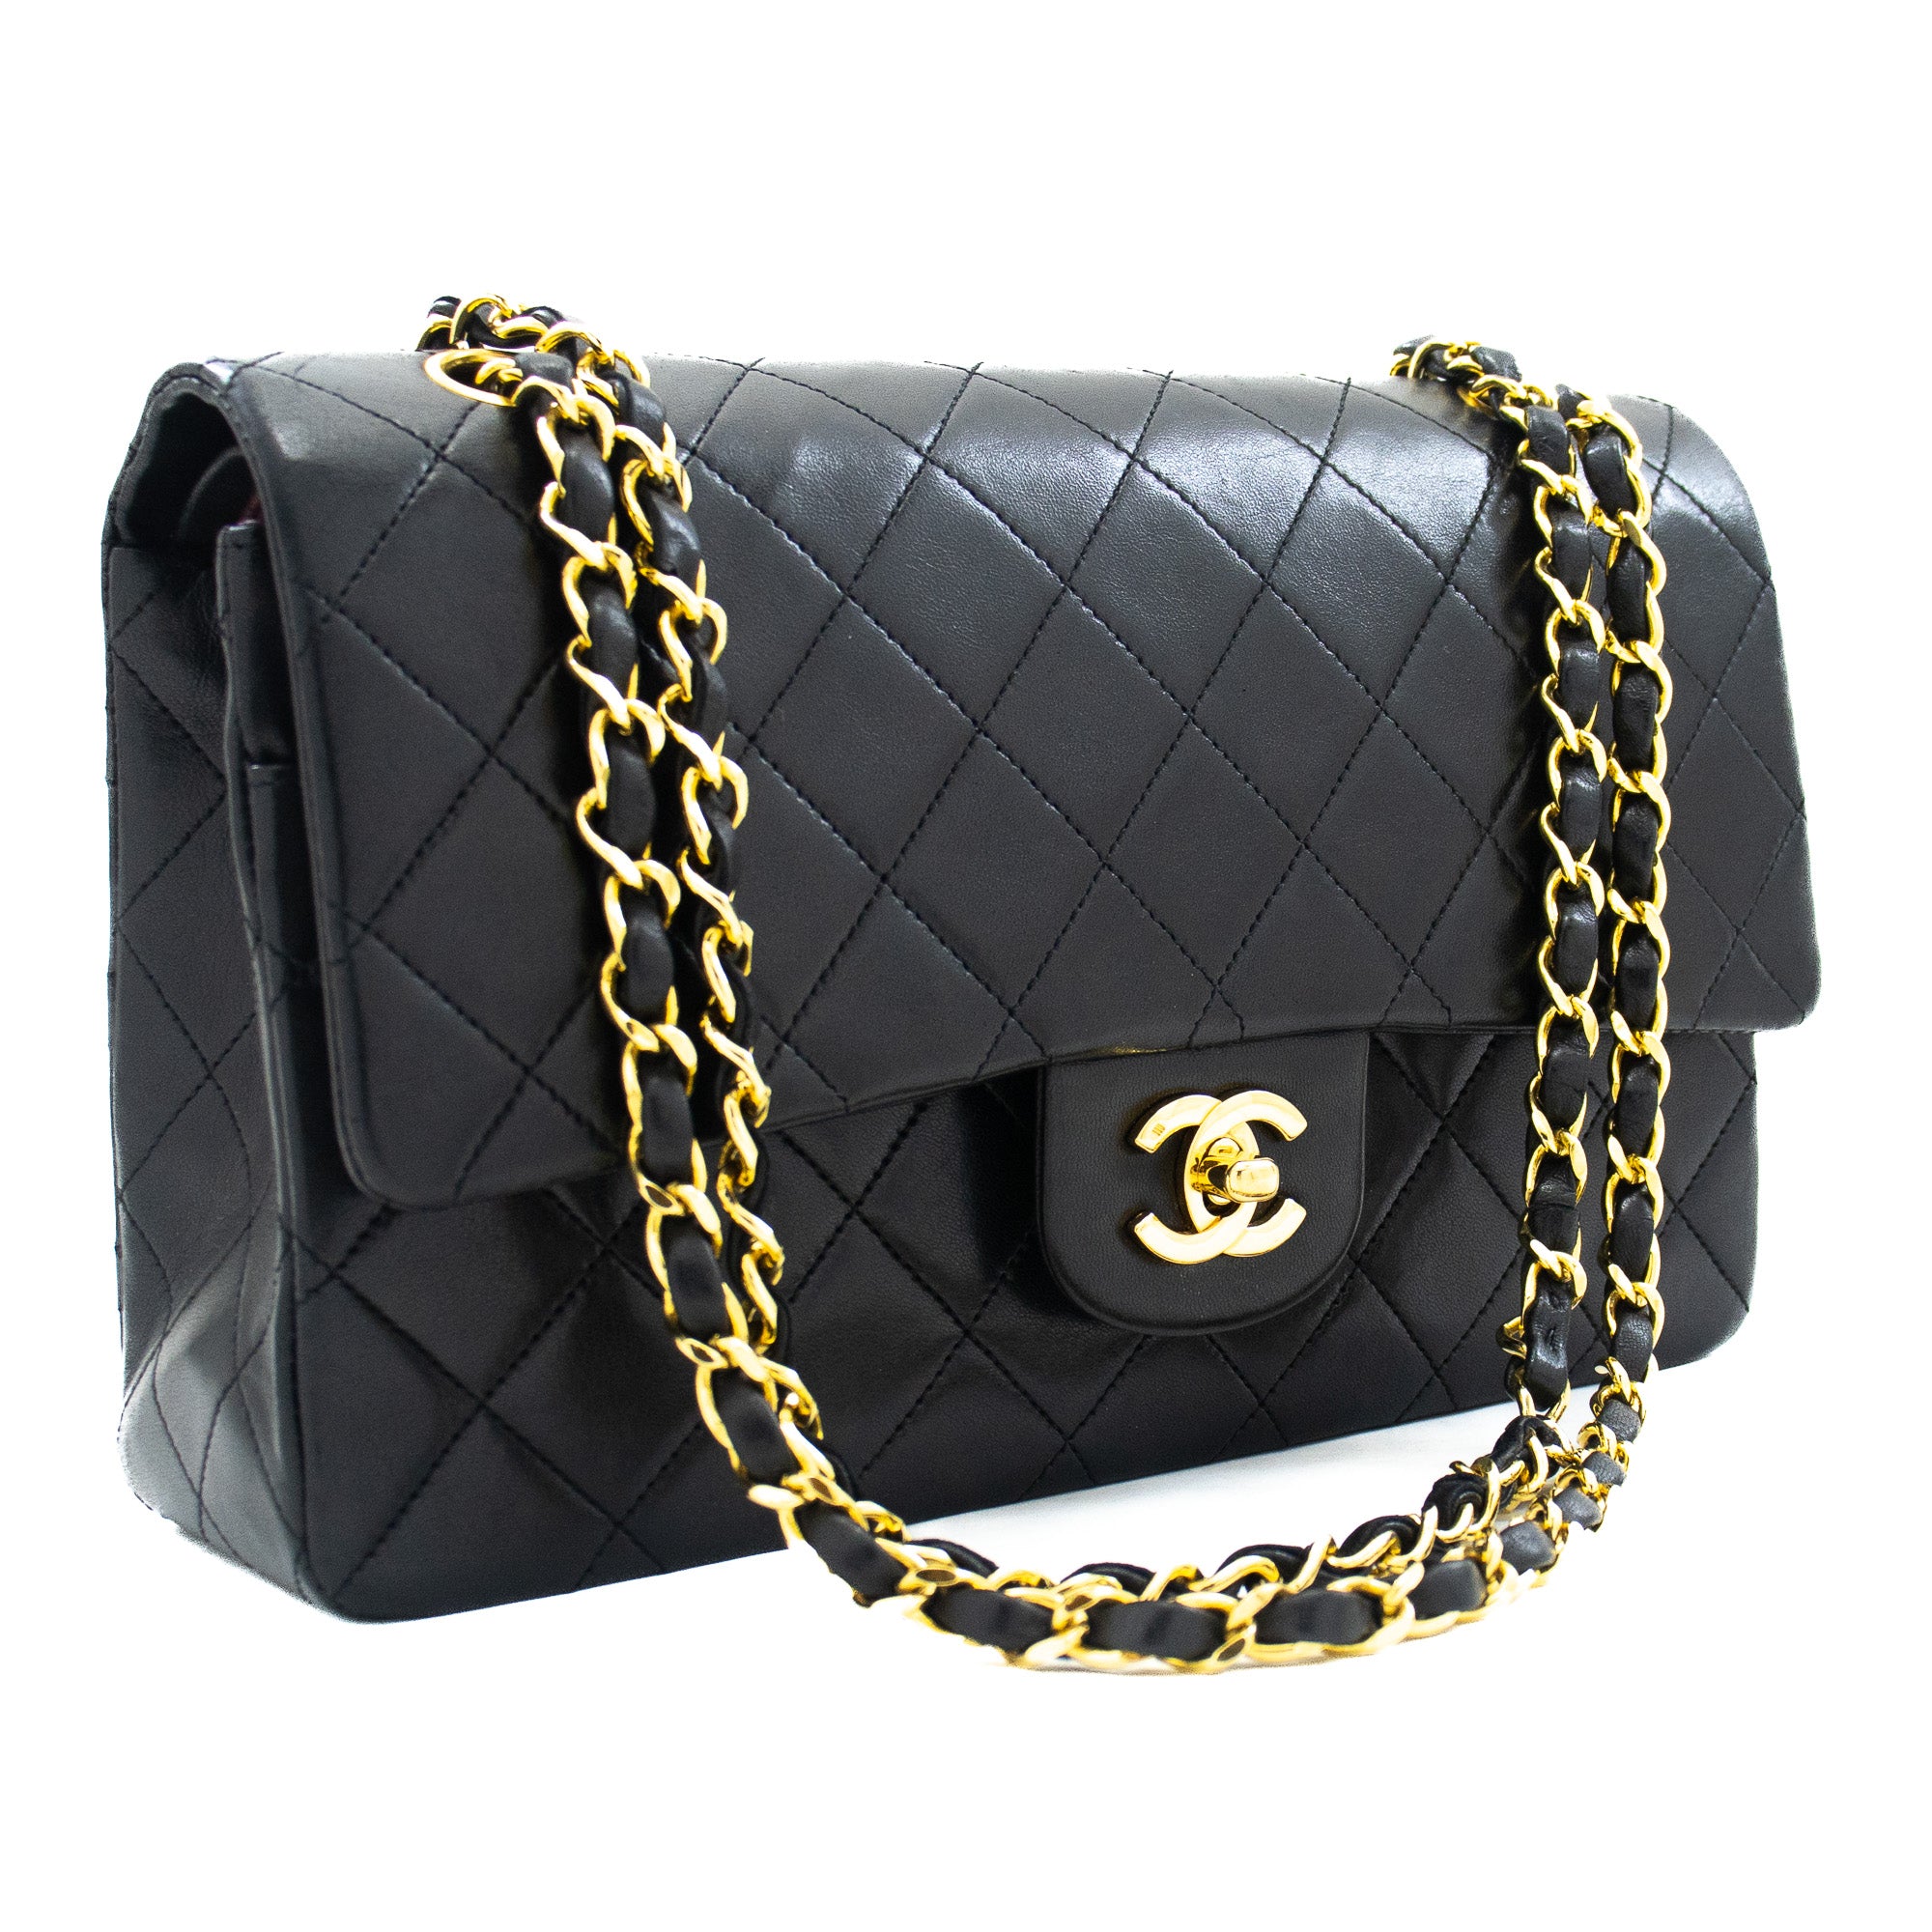 Handbags Chanel Chanel Mini Square Small Chain Shoulder Bag Crossbody Black Quilt